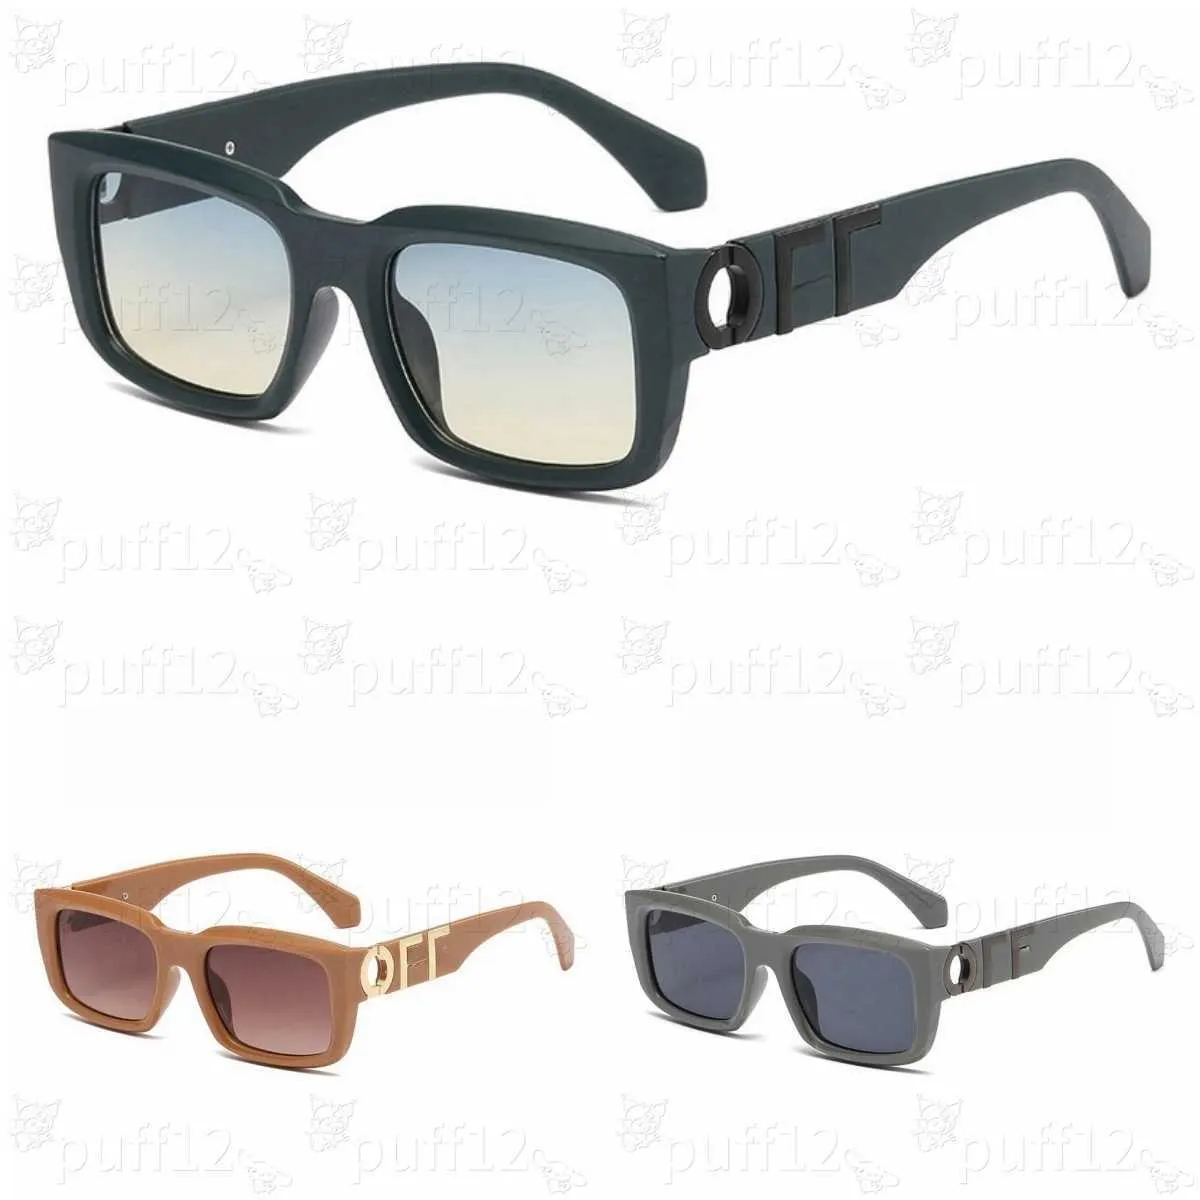 Luxury Offs White Frames Sunglasses Fashion Style Square Brand Sunglass Popular high quality Arrow x Frame Eyewear Trend Sun Glasses Bright Sports Travel Sunglass